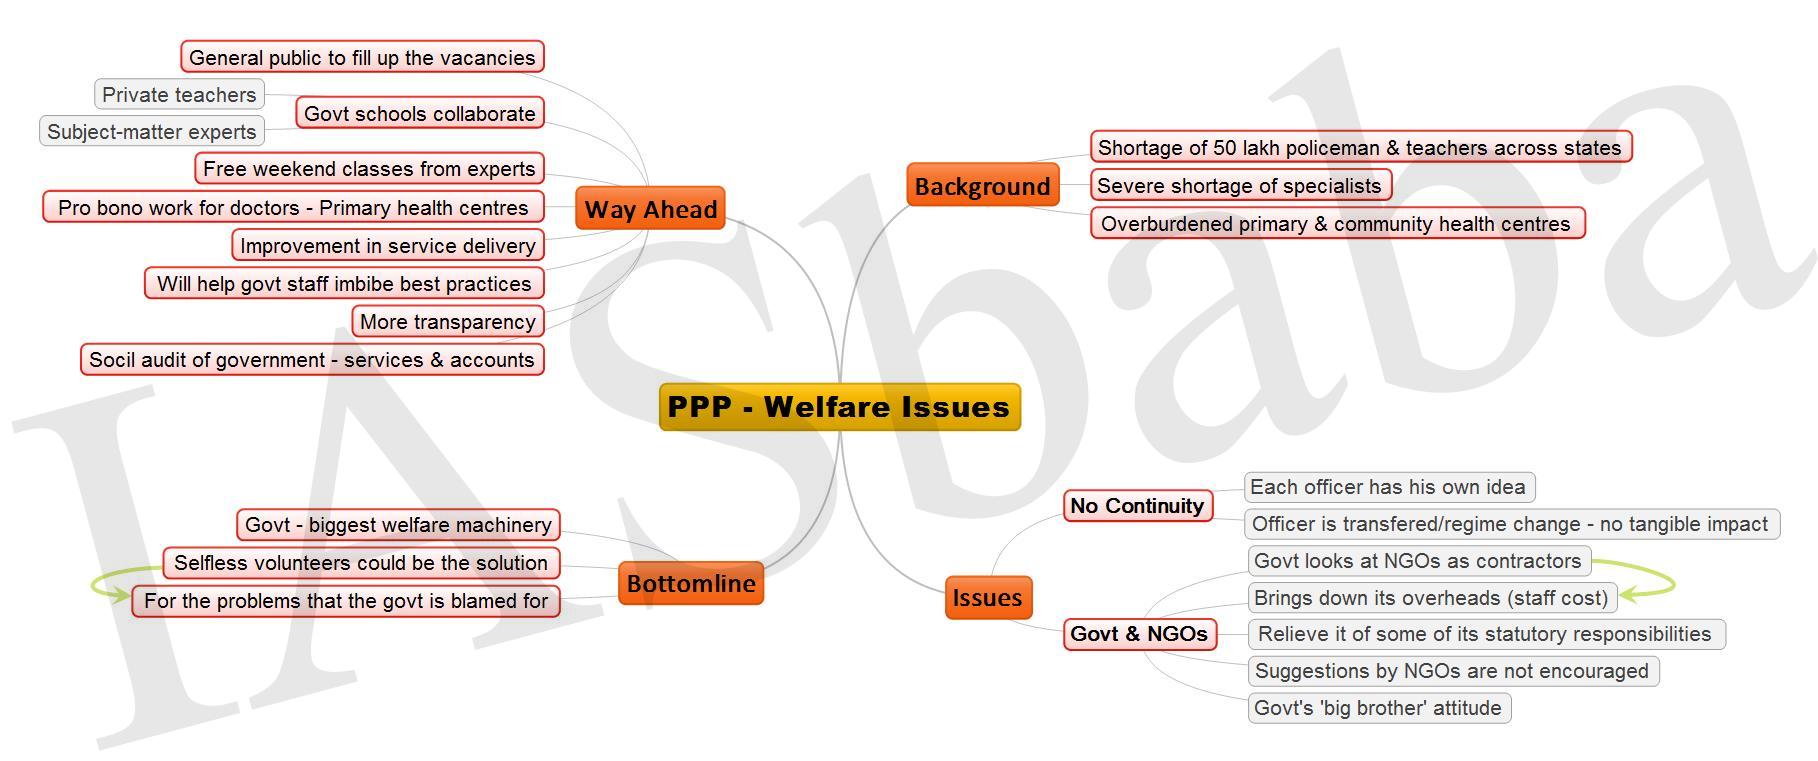 PPP Welfare Issues JPEG